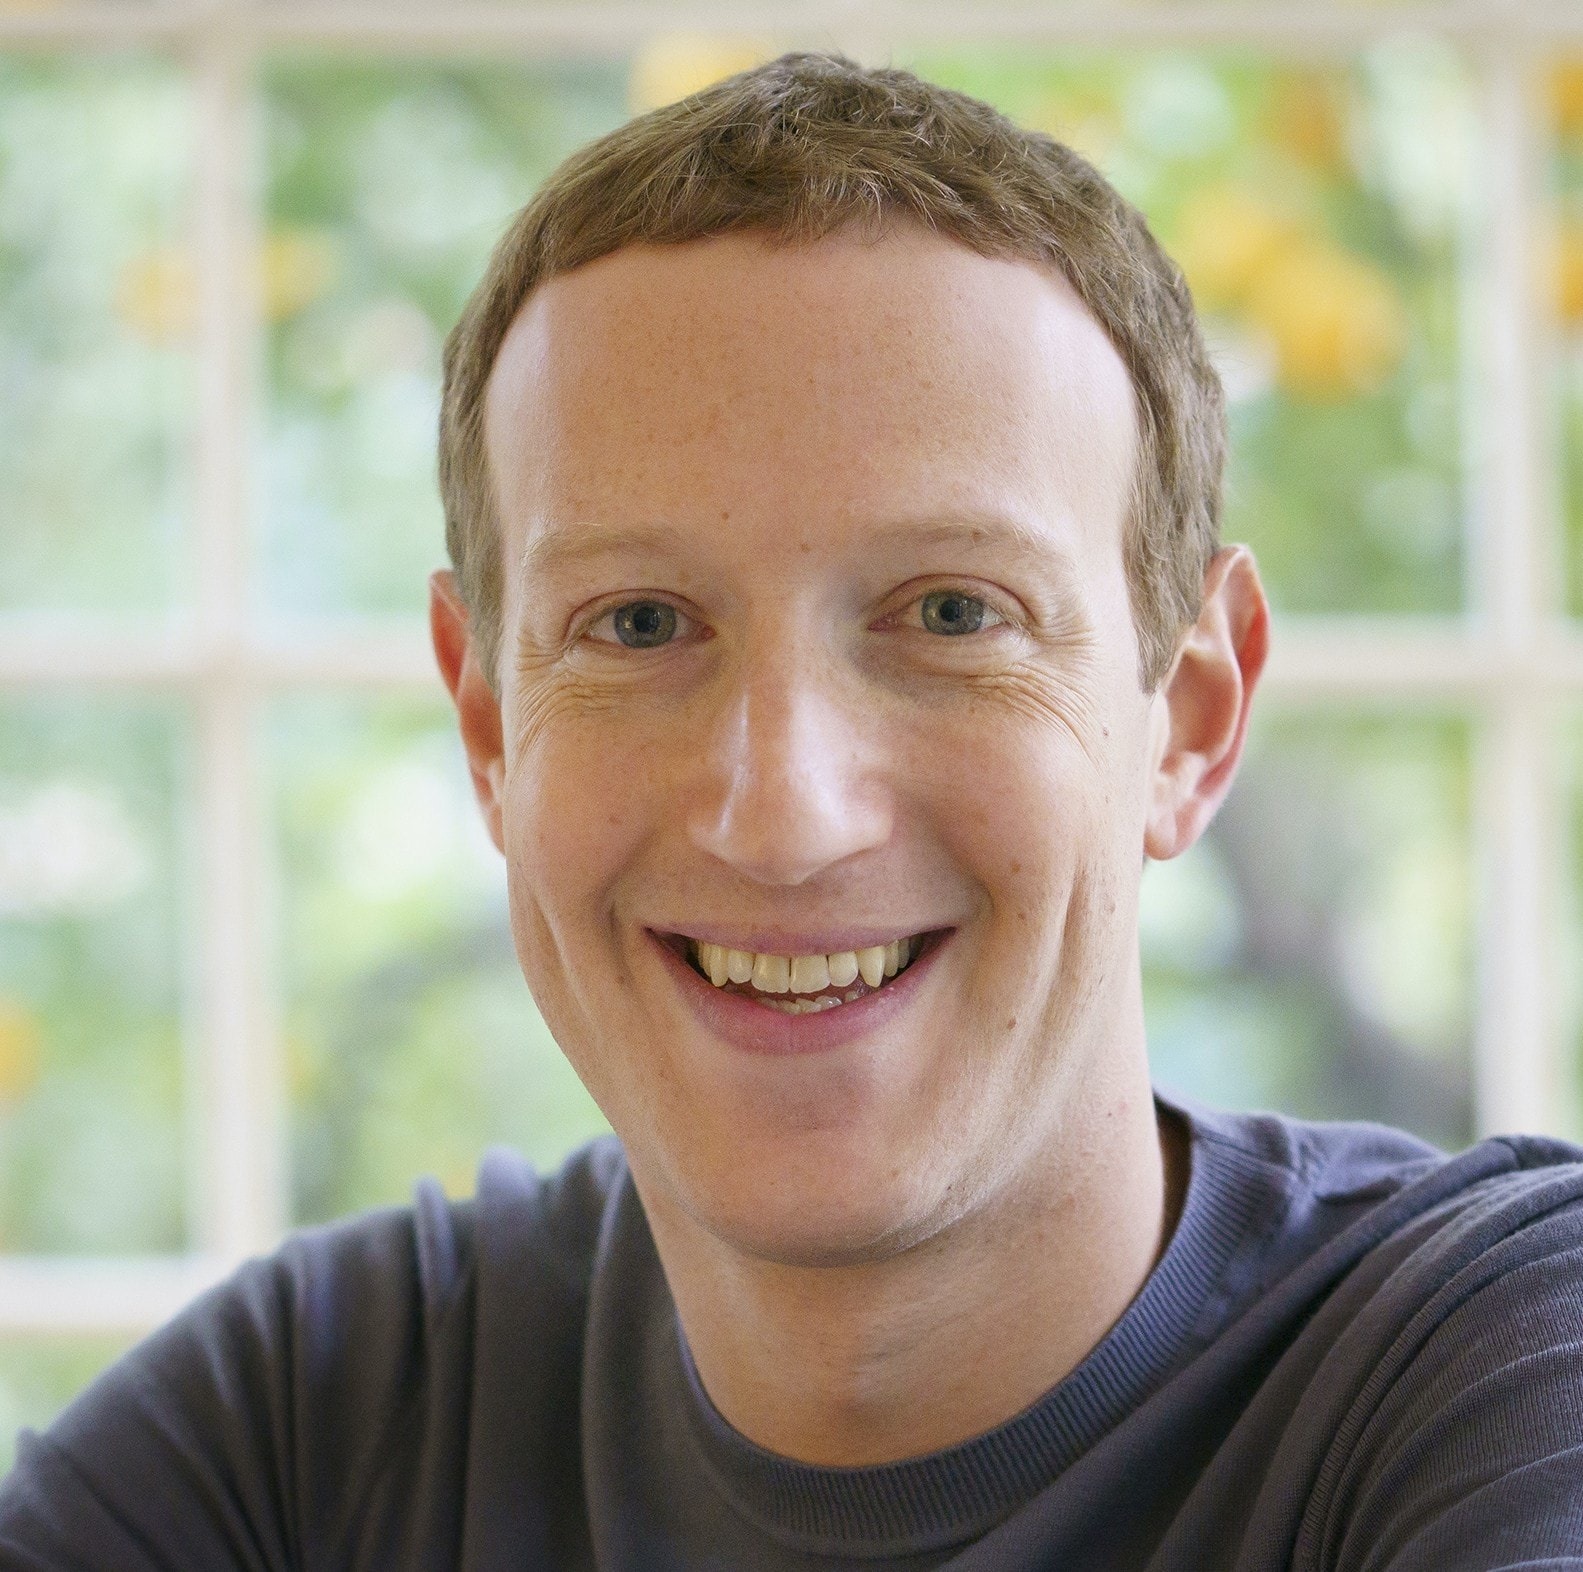 Mark Zuckerberg a pierdut 7 miliarde de dolari în doar câteva ore